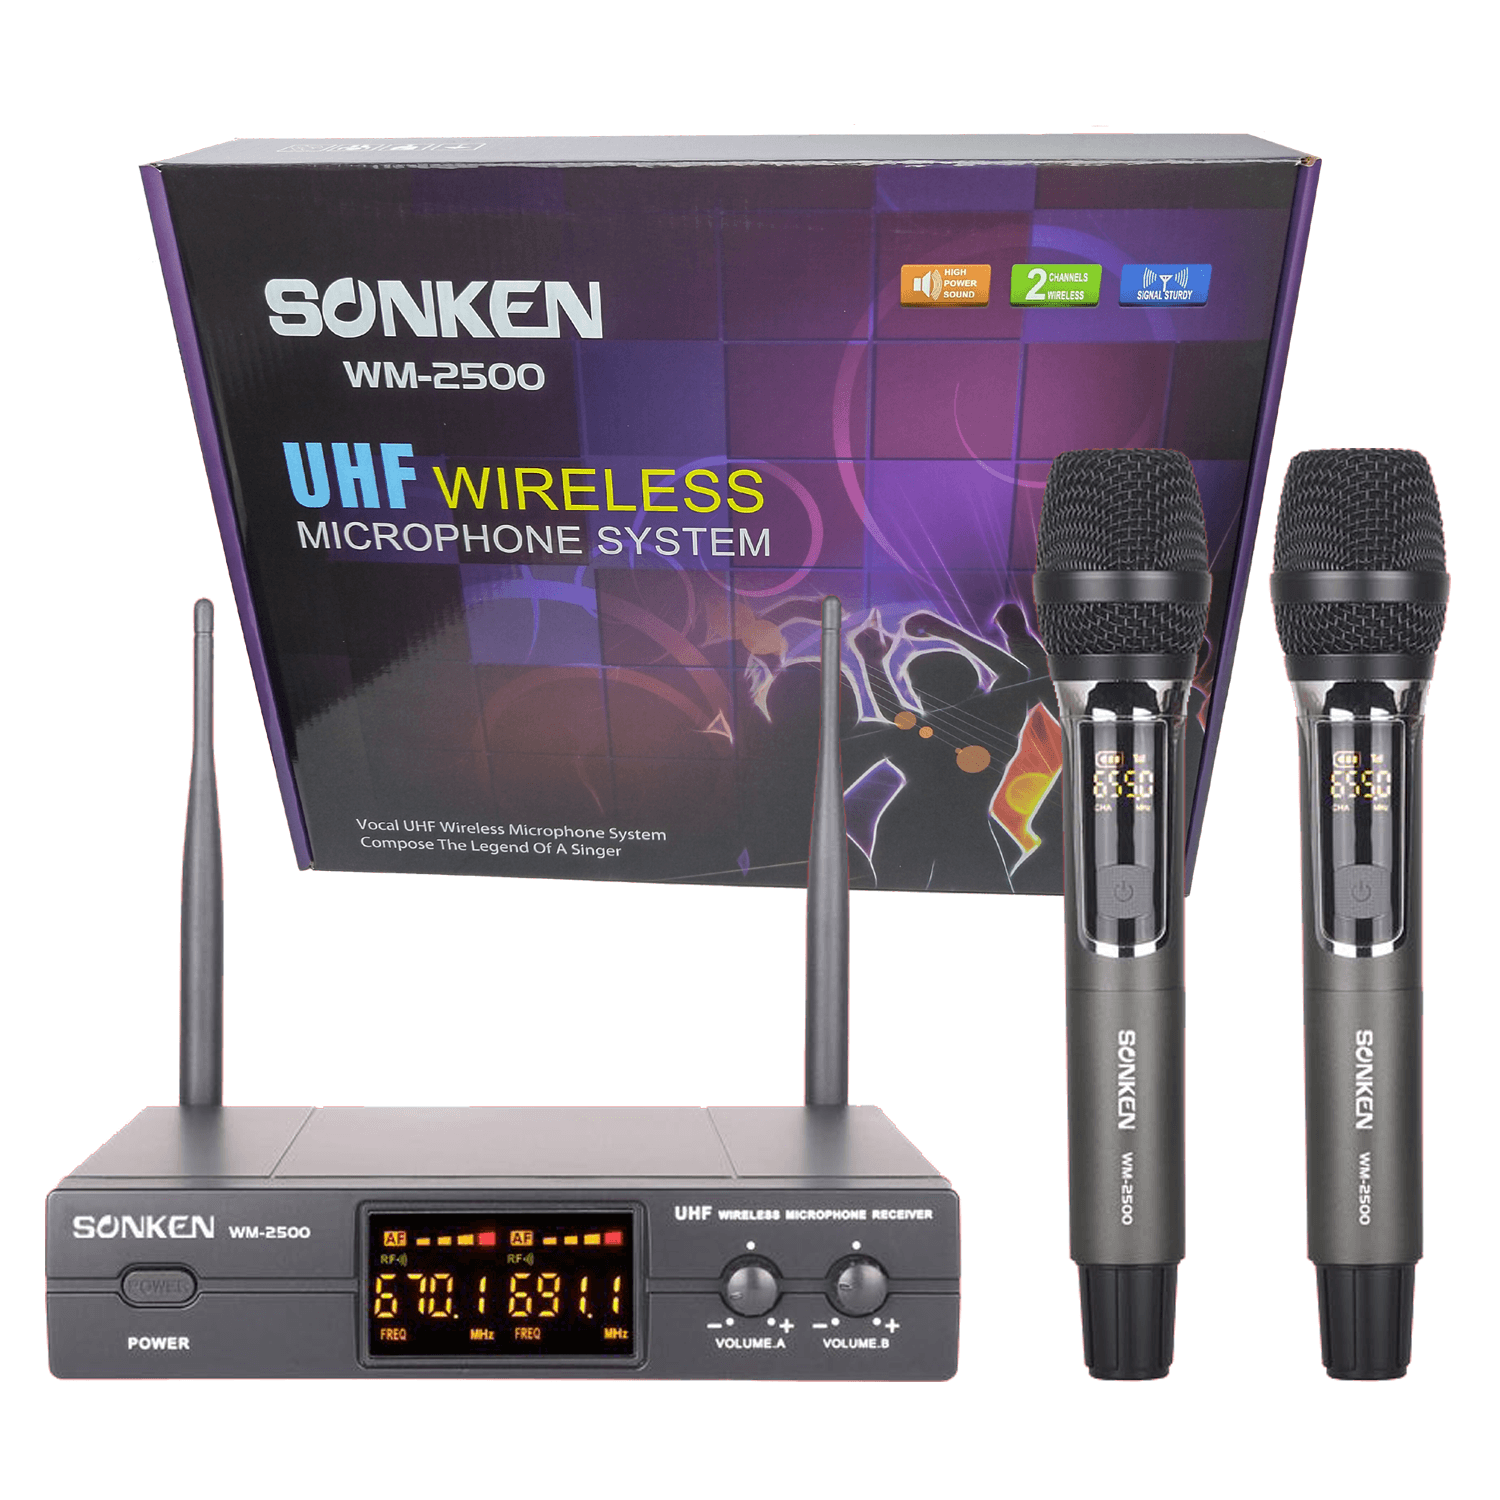 Sonken WM-2500 (Multi Channel) Pro UHF Wireless Microphones (2) and Receiver Unit - Karaoke Home Entertainment